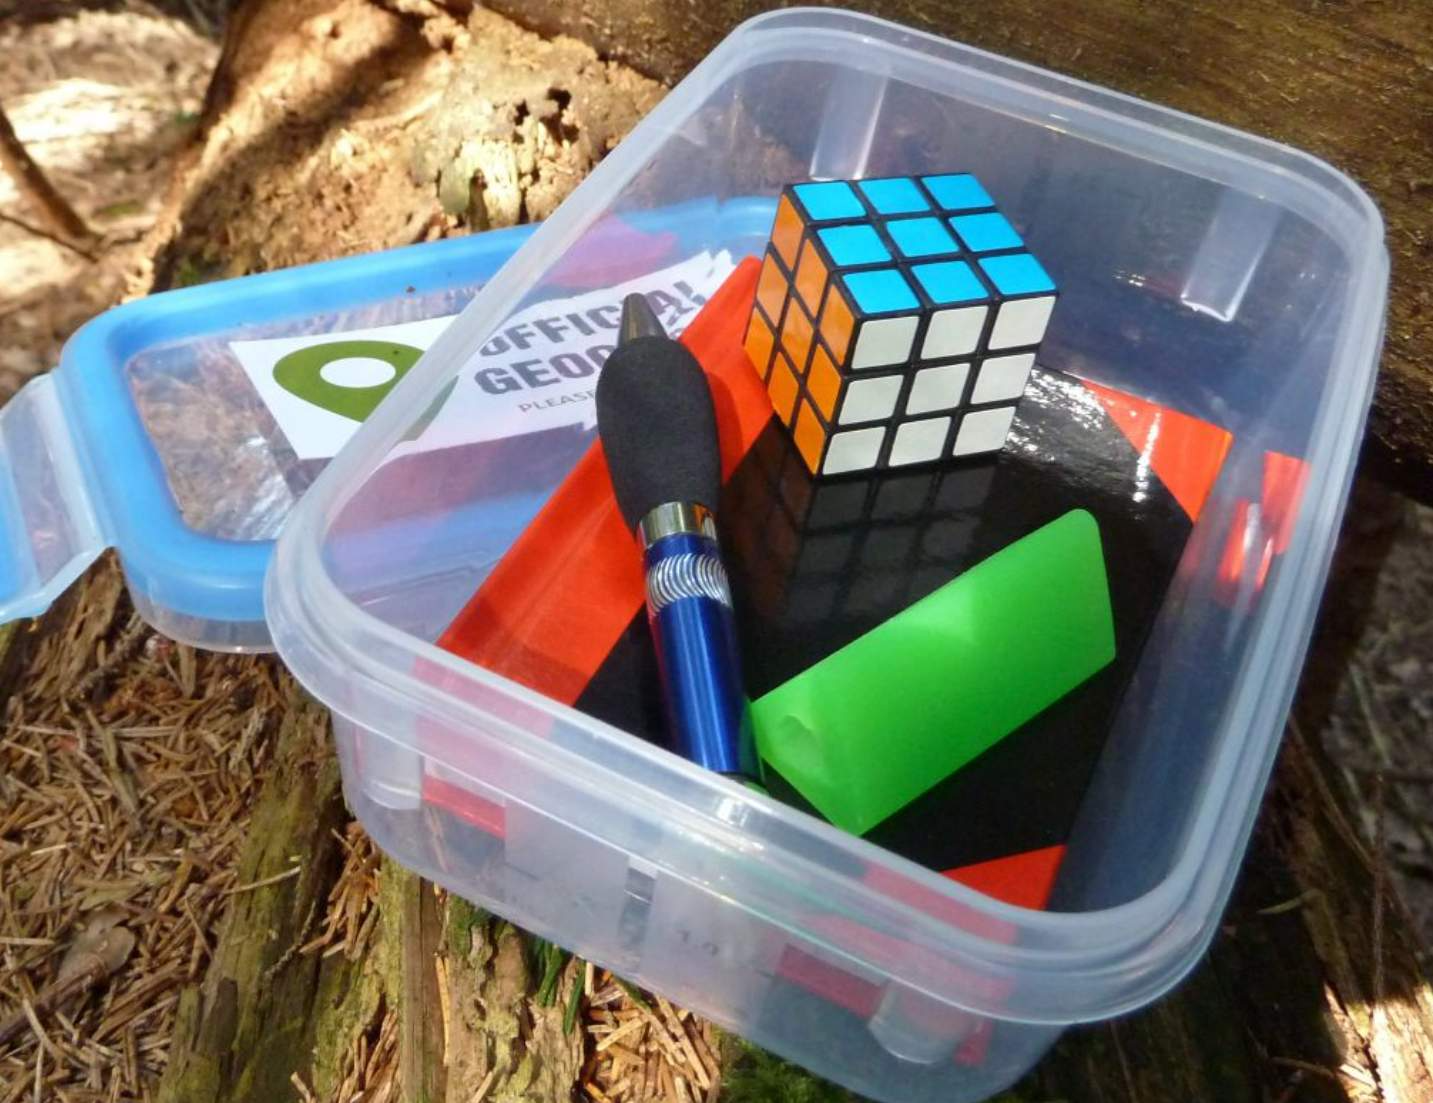 Geocache trinkets and Rubik's Cube